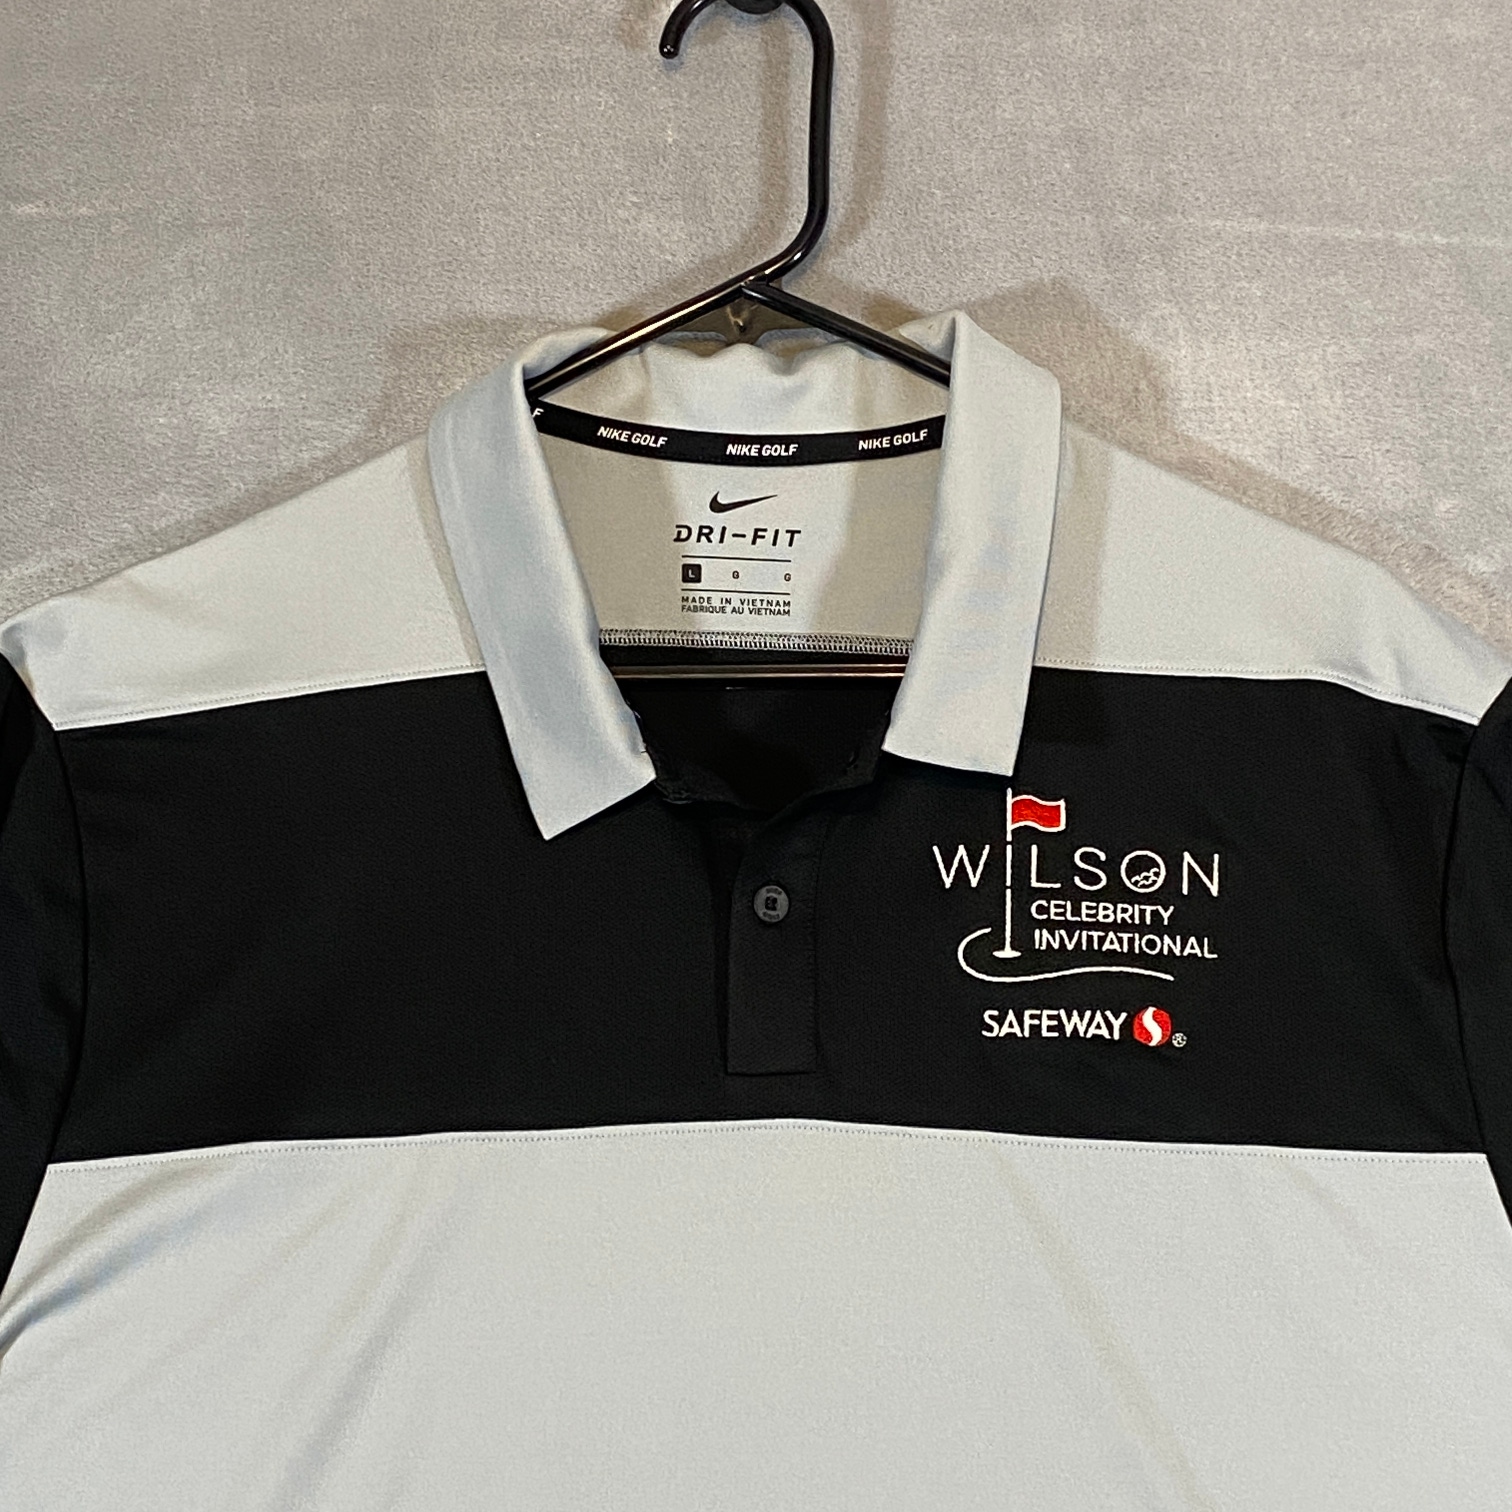 NIKE Golf Polo Shirt Mens Large Short Sleeve Russell Wilson Celeb Invitational